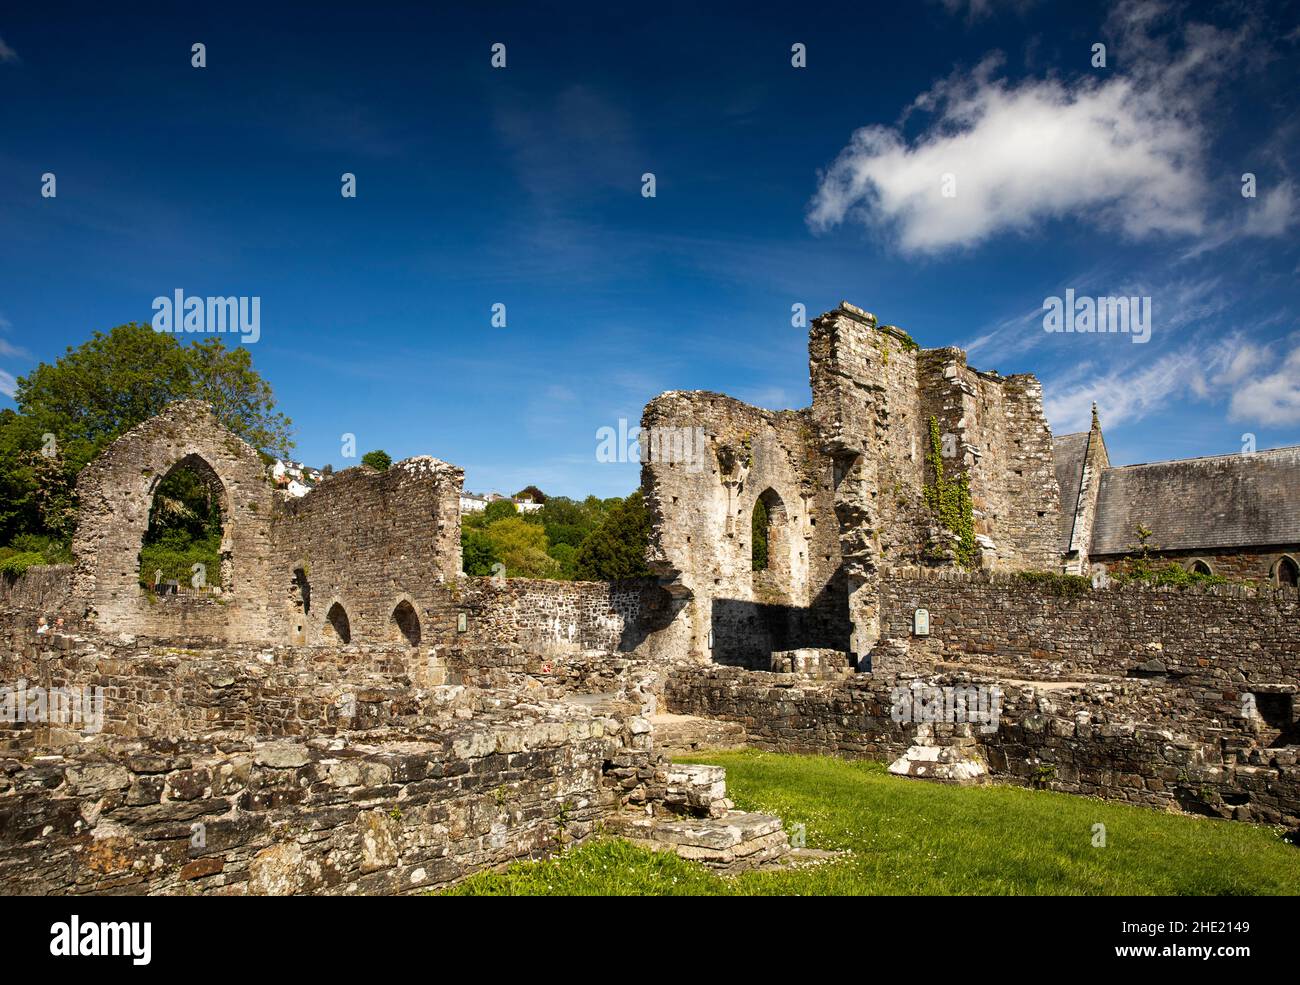 UK, Wales, Pembrokeshire, Saint Dogmaels, Shinrig, Abbey ruins Stock Photo